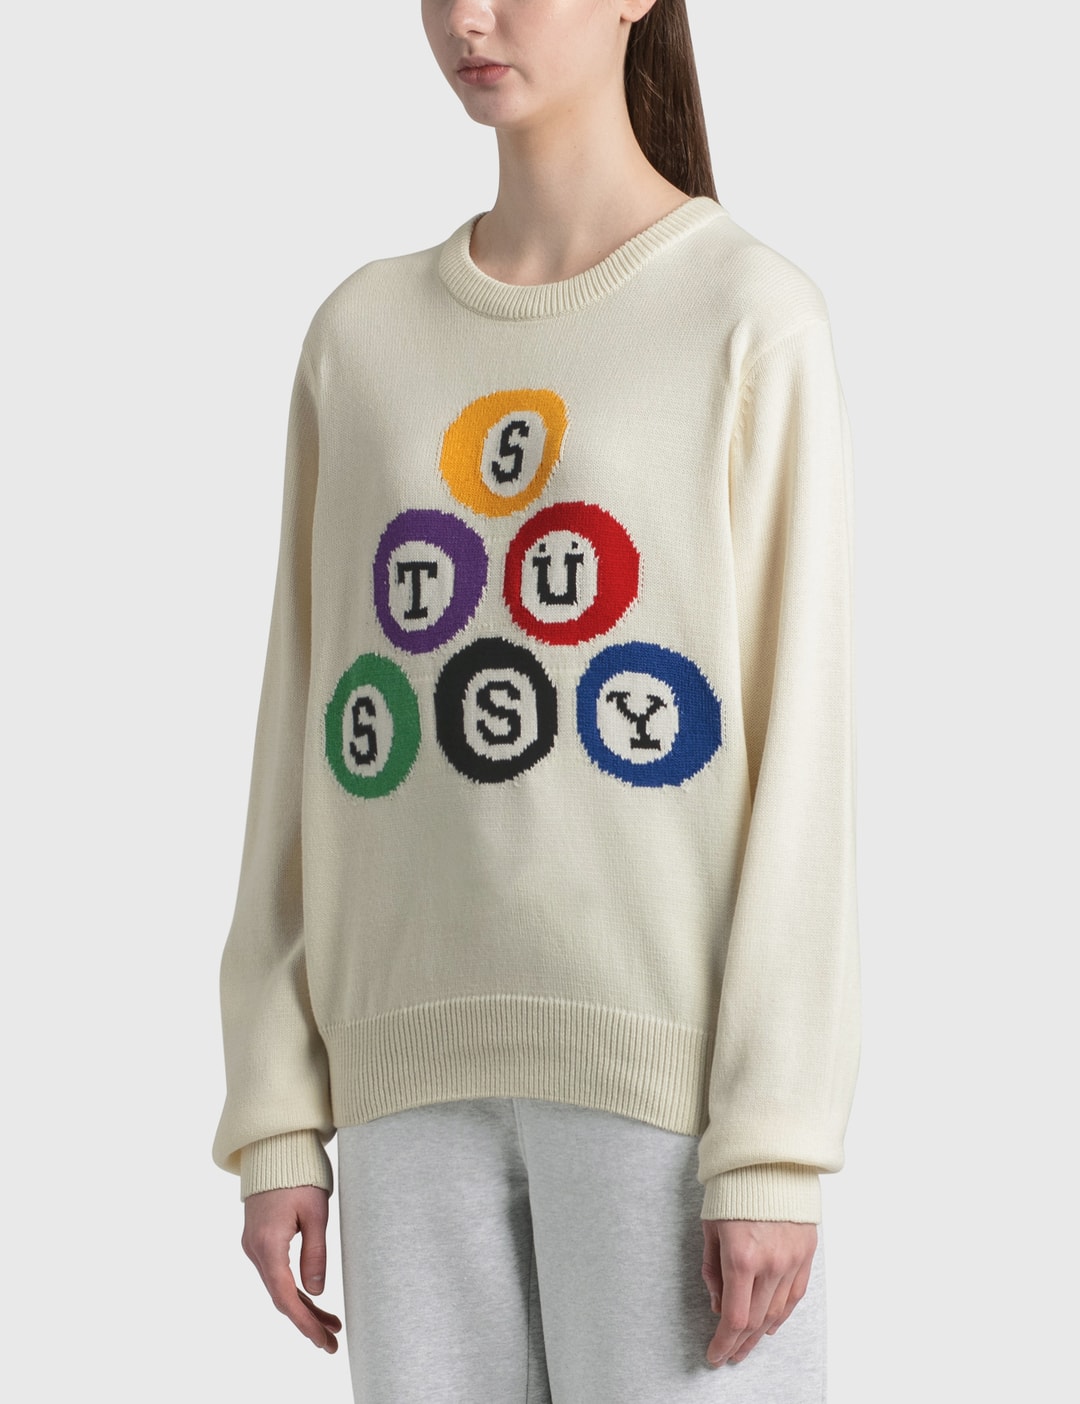 Stüssy - Stussy Billiard Sweater | HBX - Globally Curated Fashion and ...